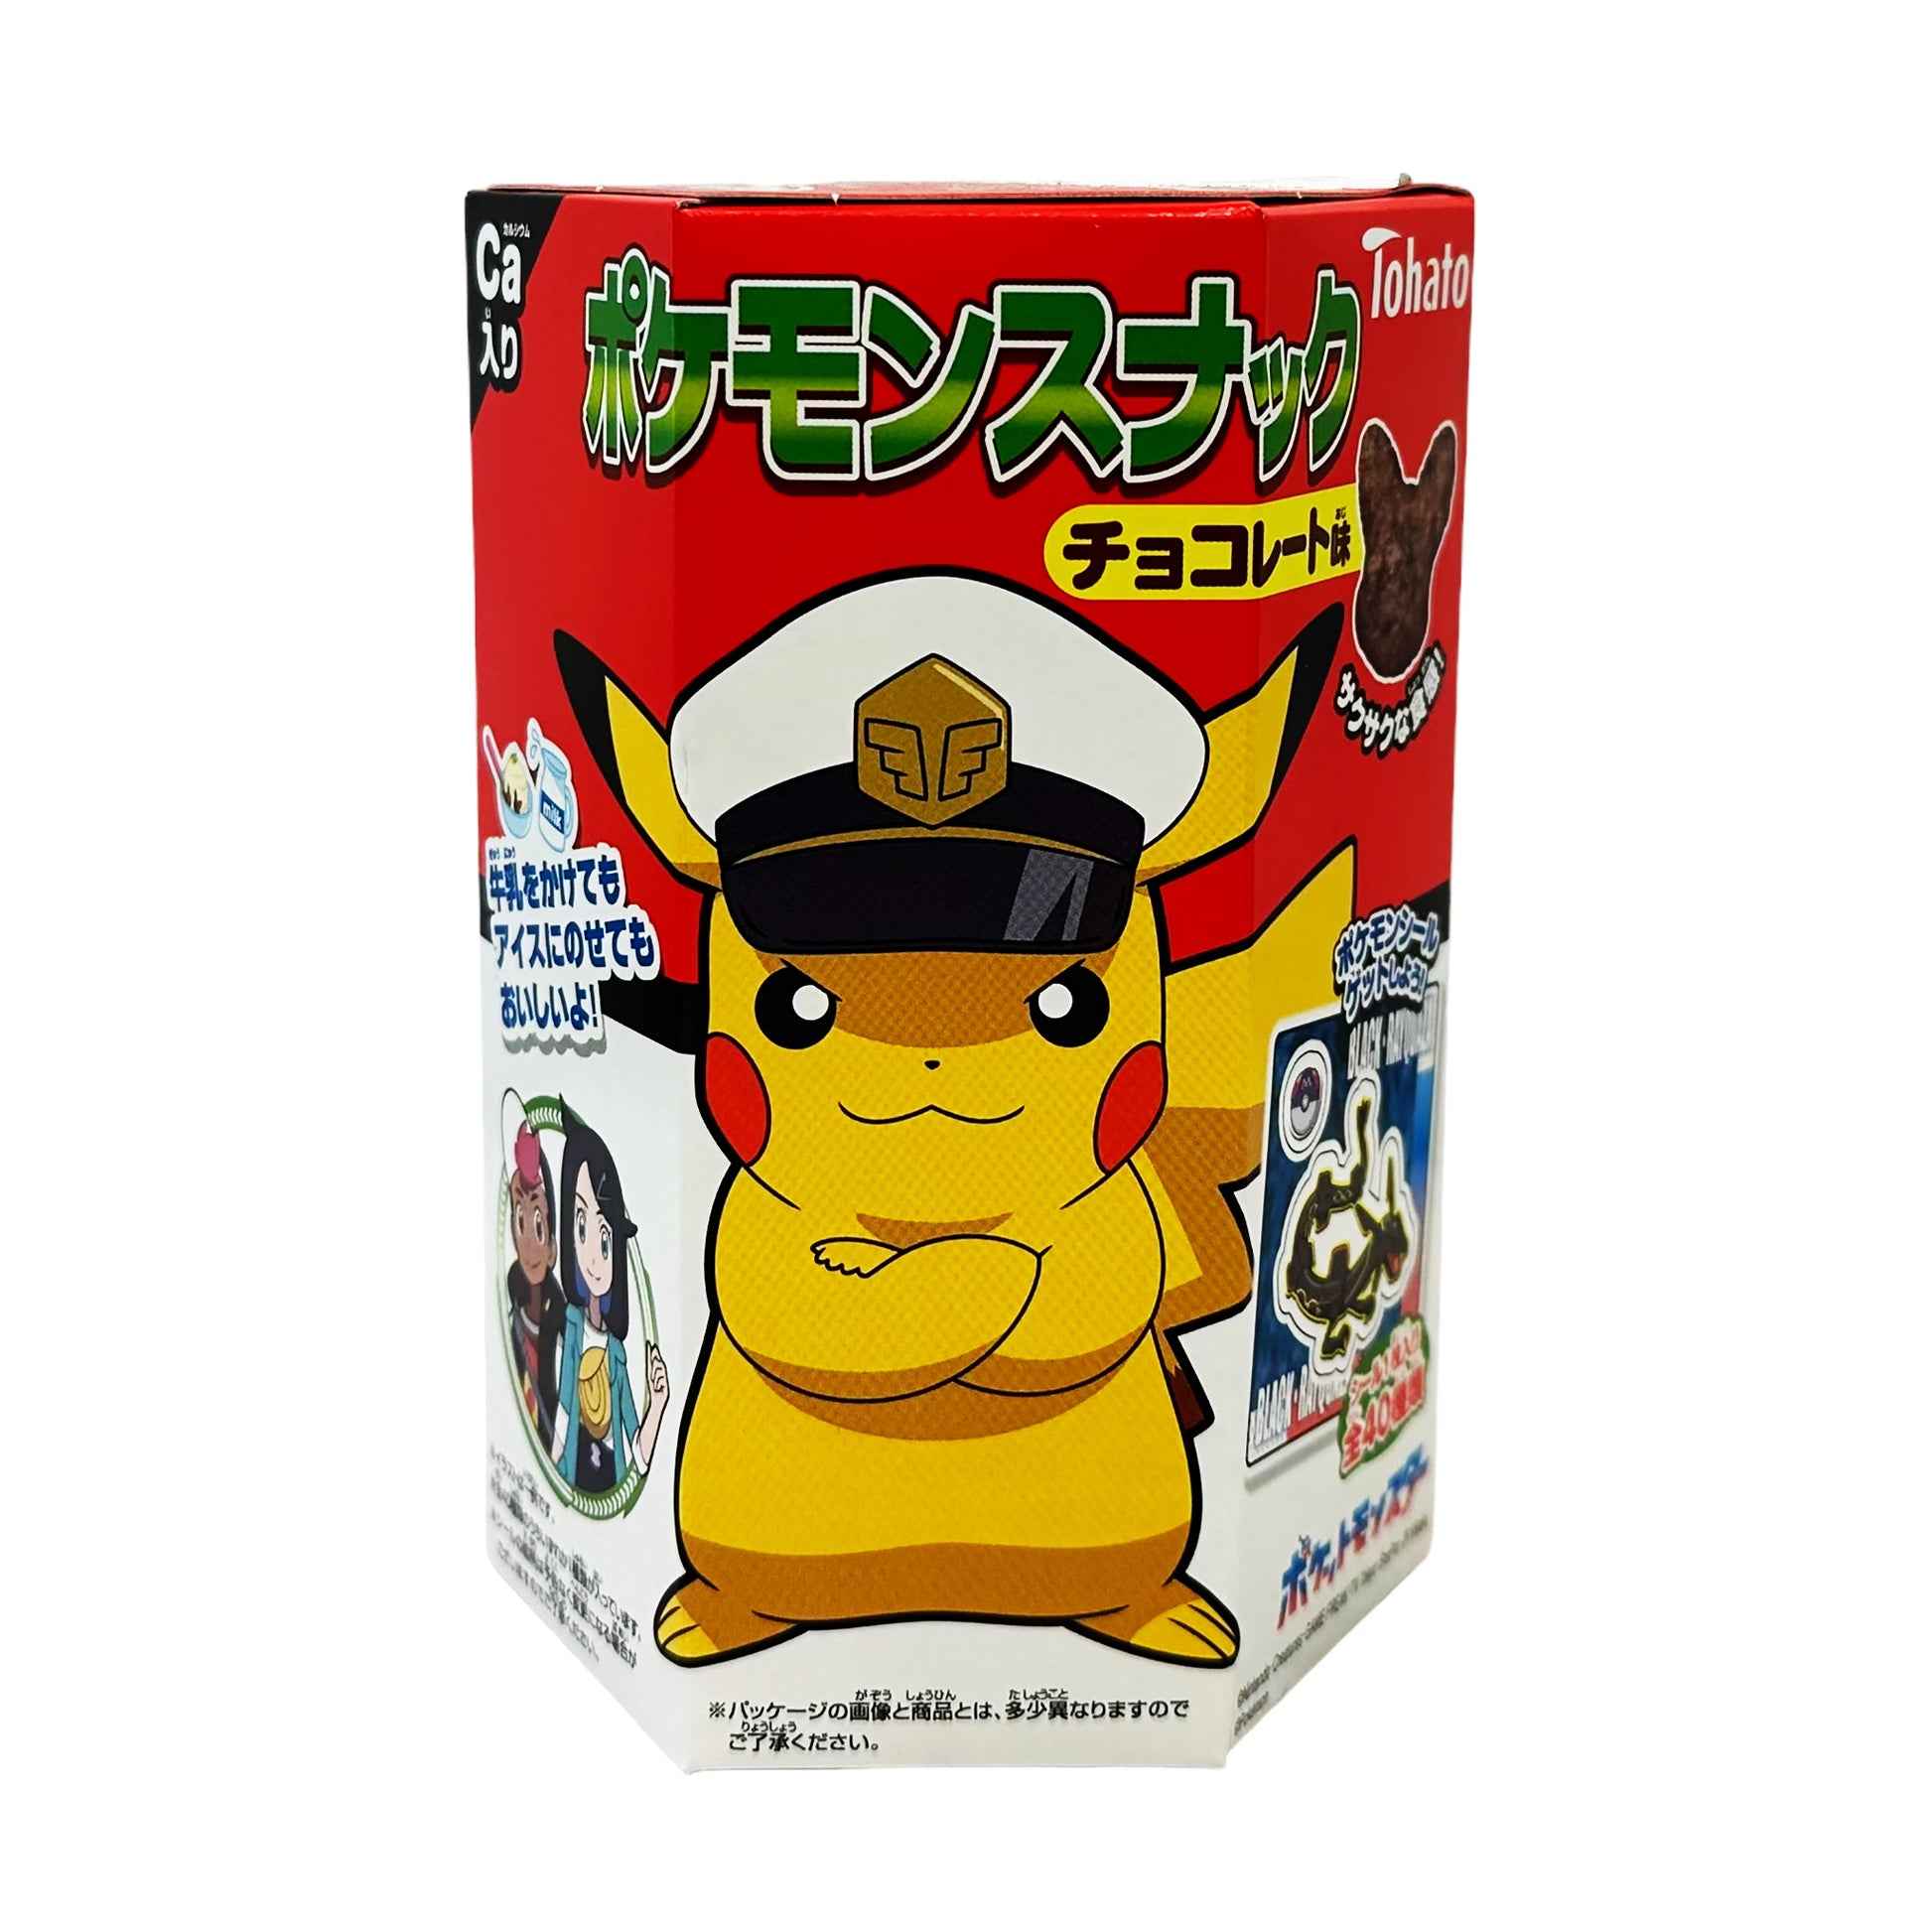 Tohato Pokemon Puff Snack - Chocolate Flavor 0.8oz (23g) - Just